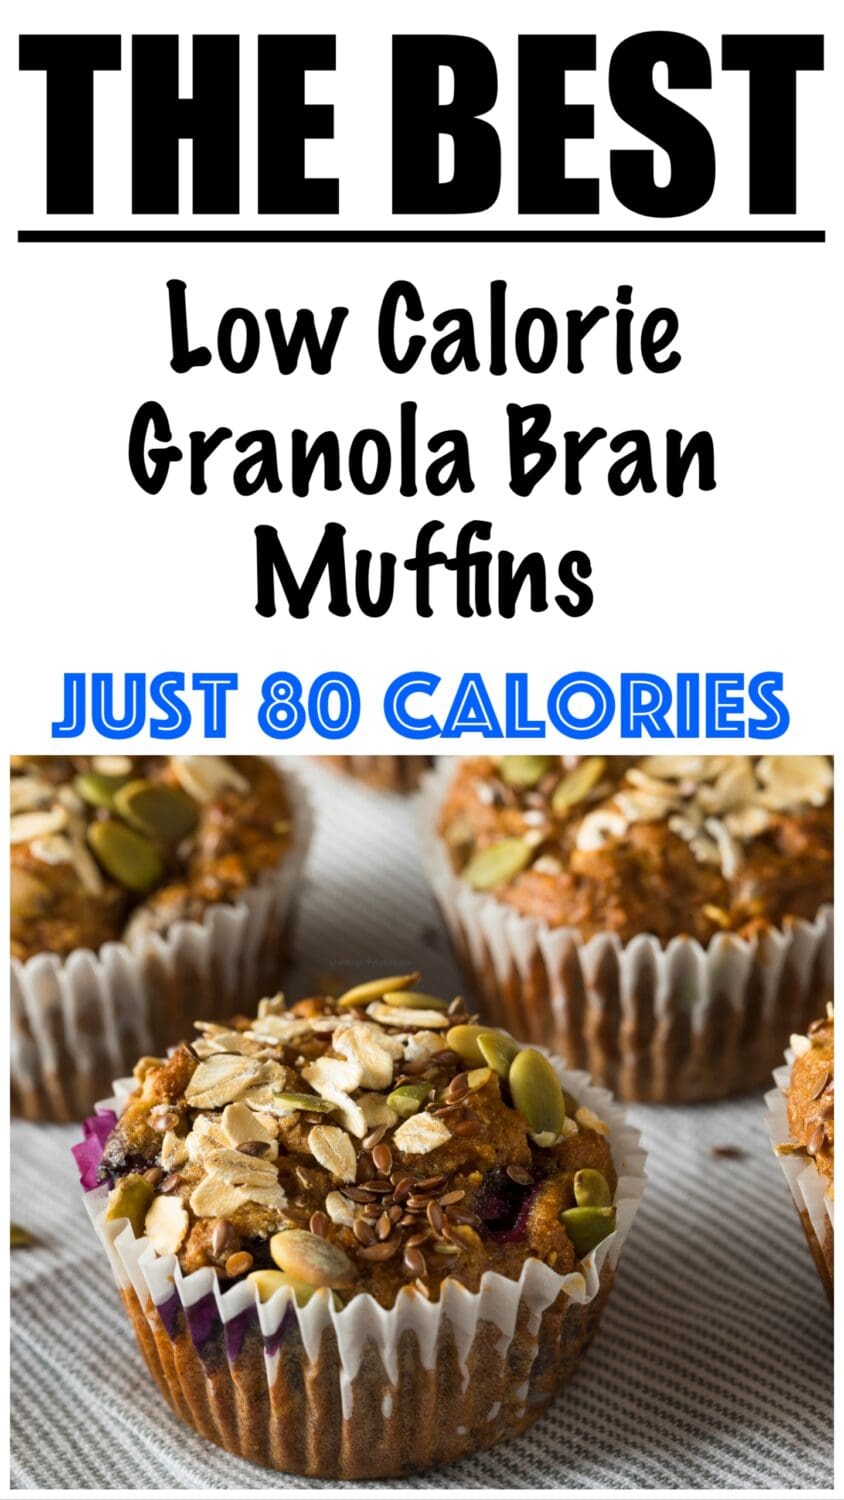 Low Calorie Granola Bran Muffins